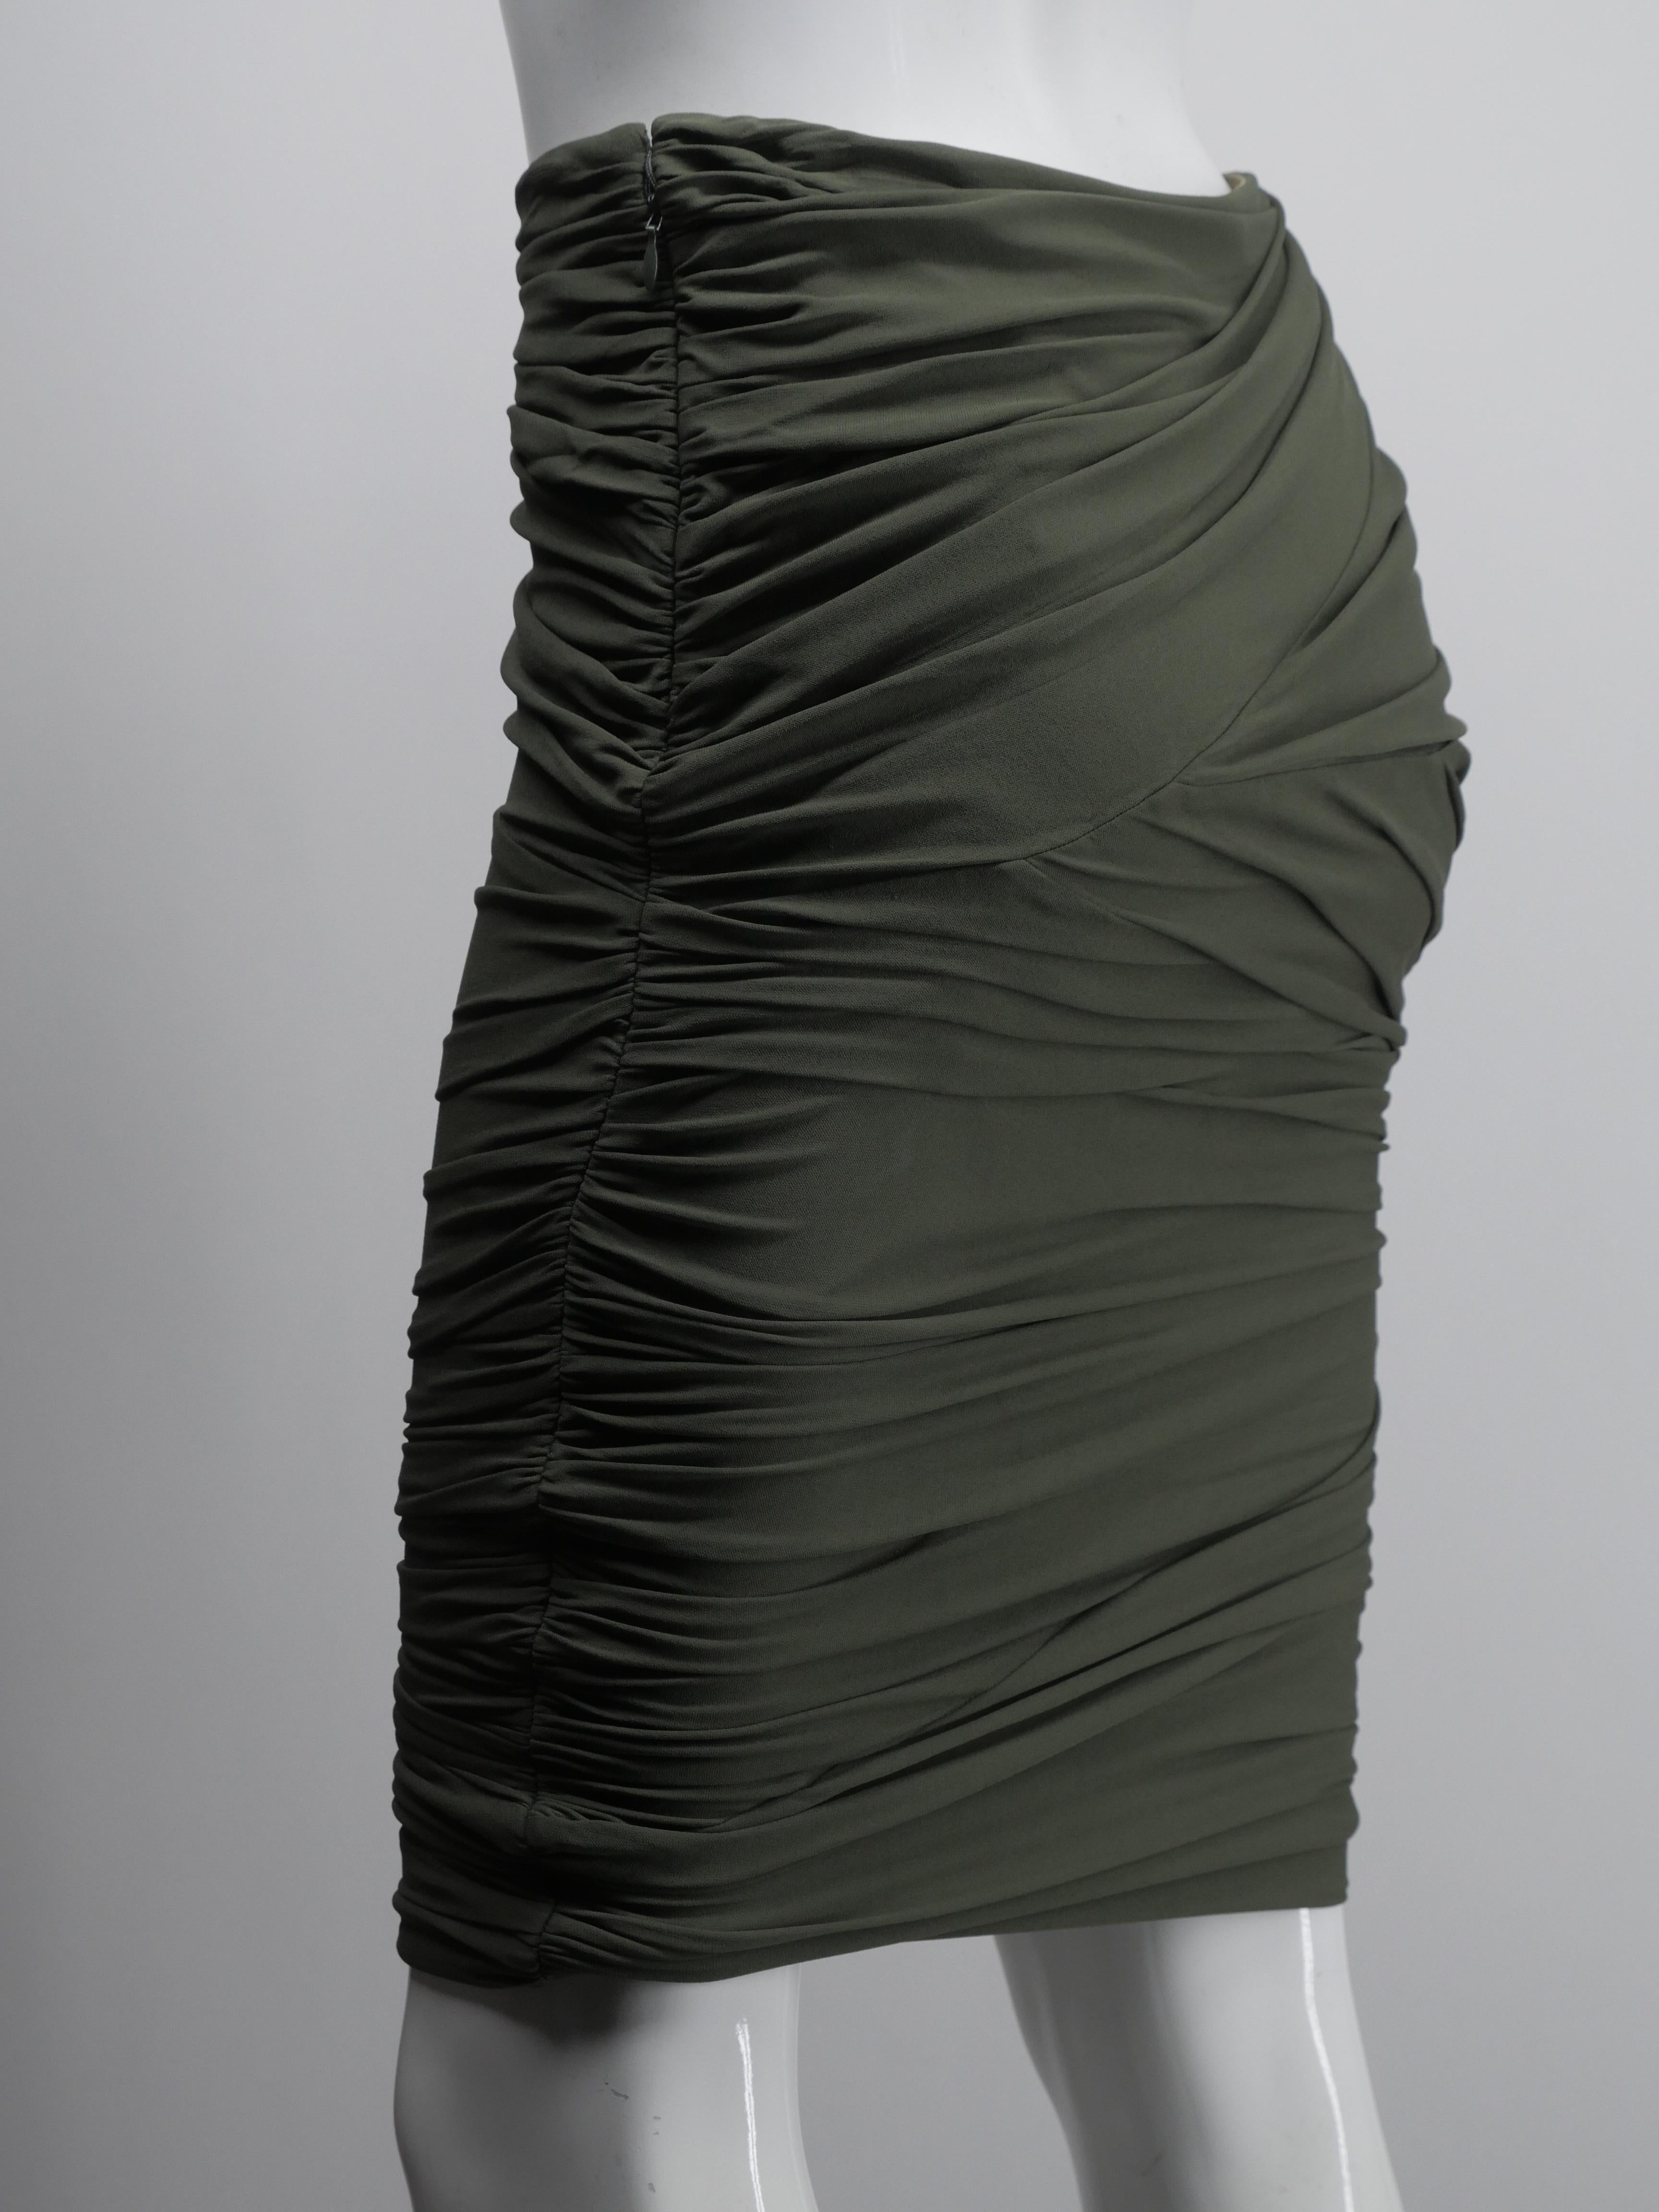 Ralph Lauren Black Label Size 6 Olive Green Ruched Skirt 4